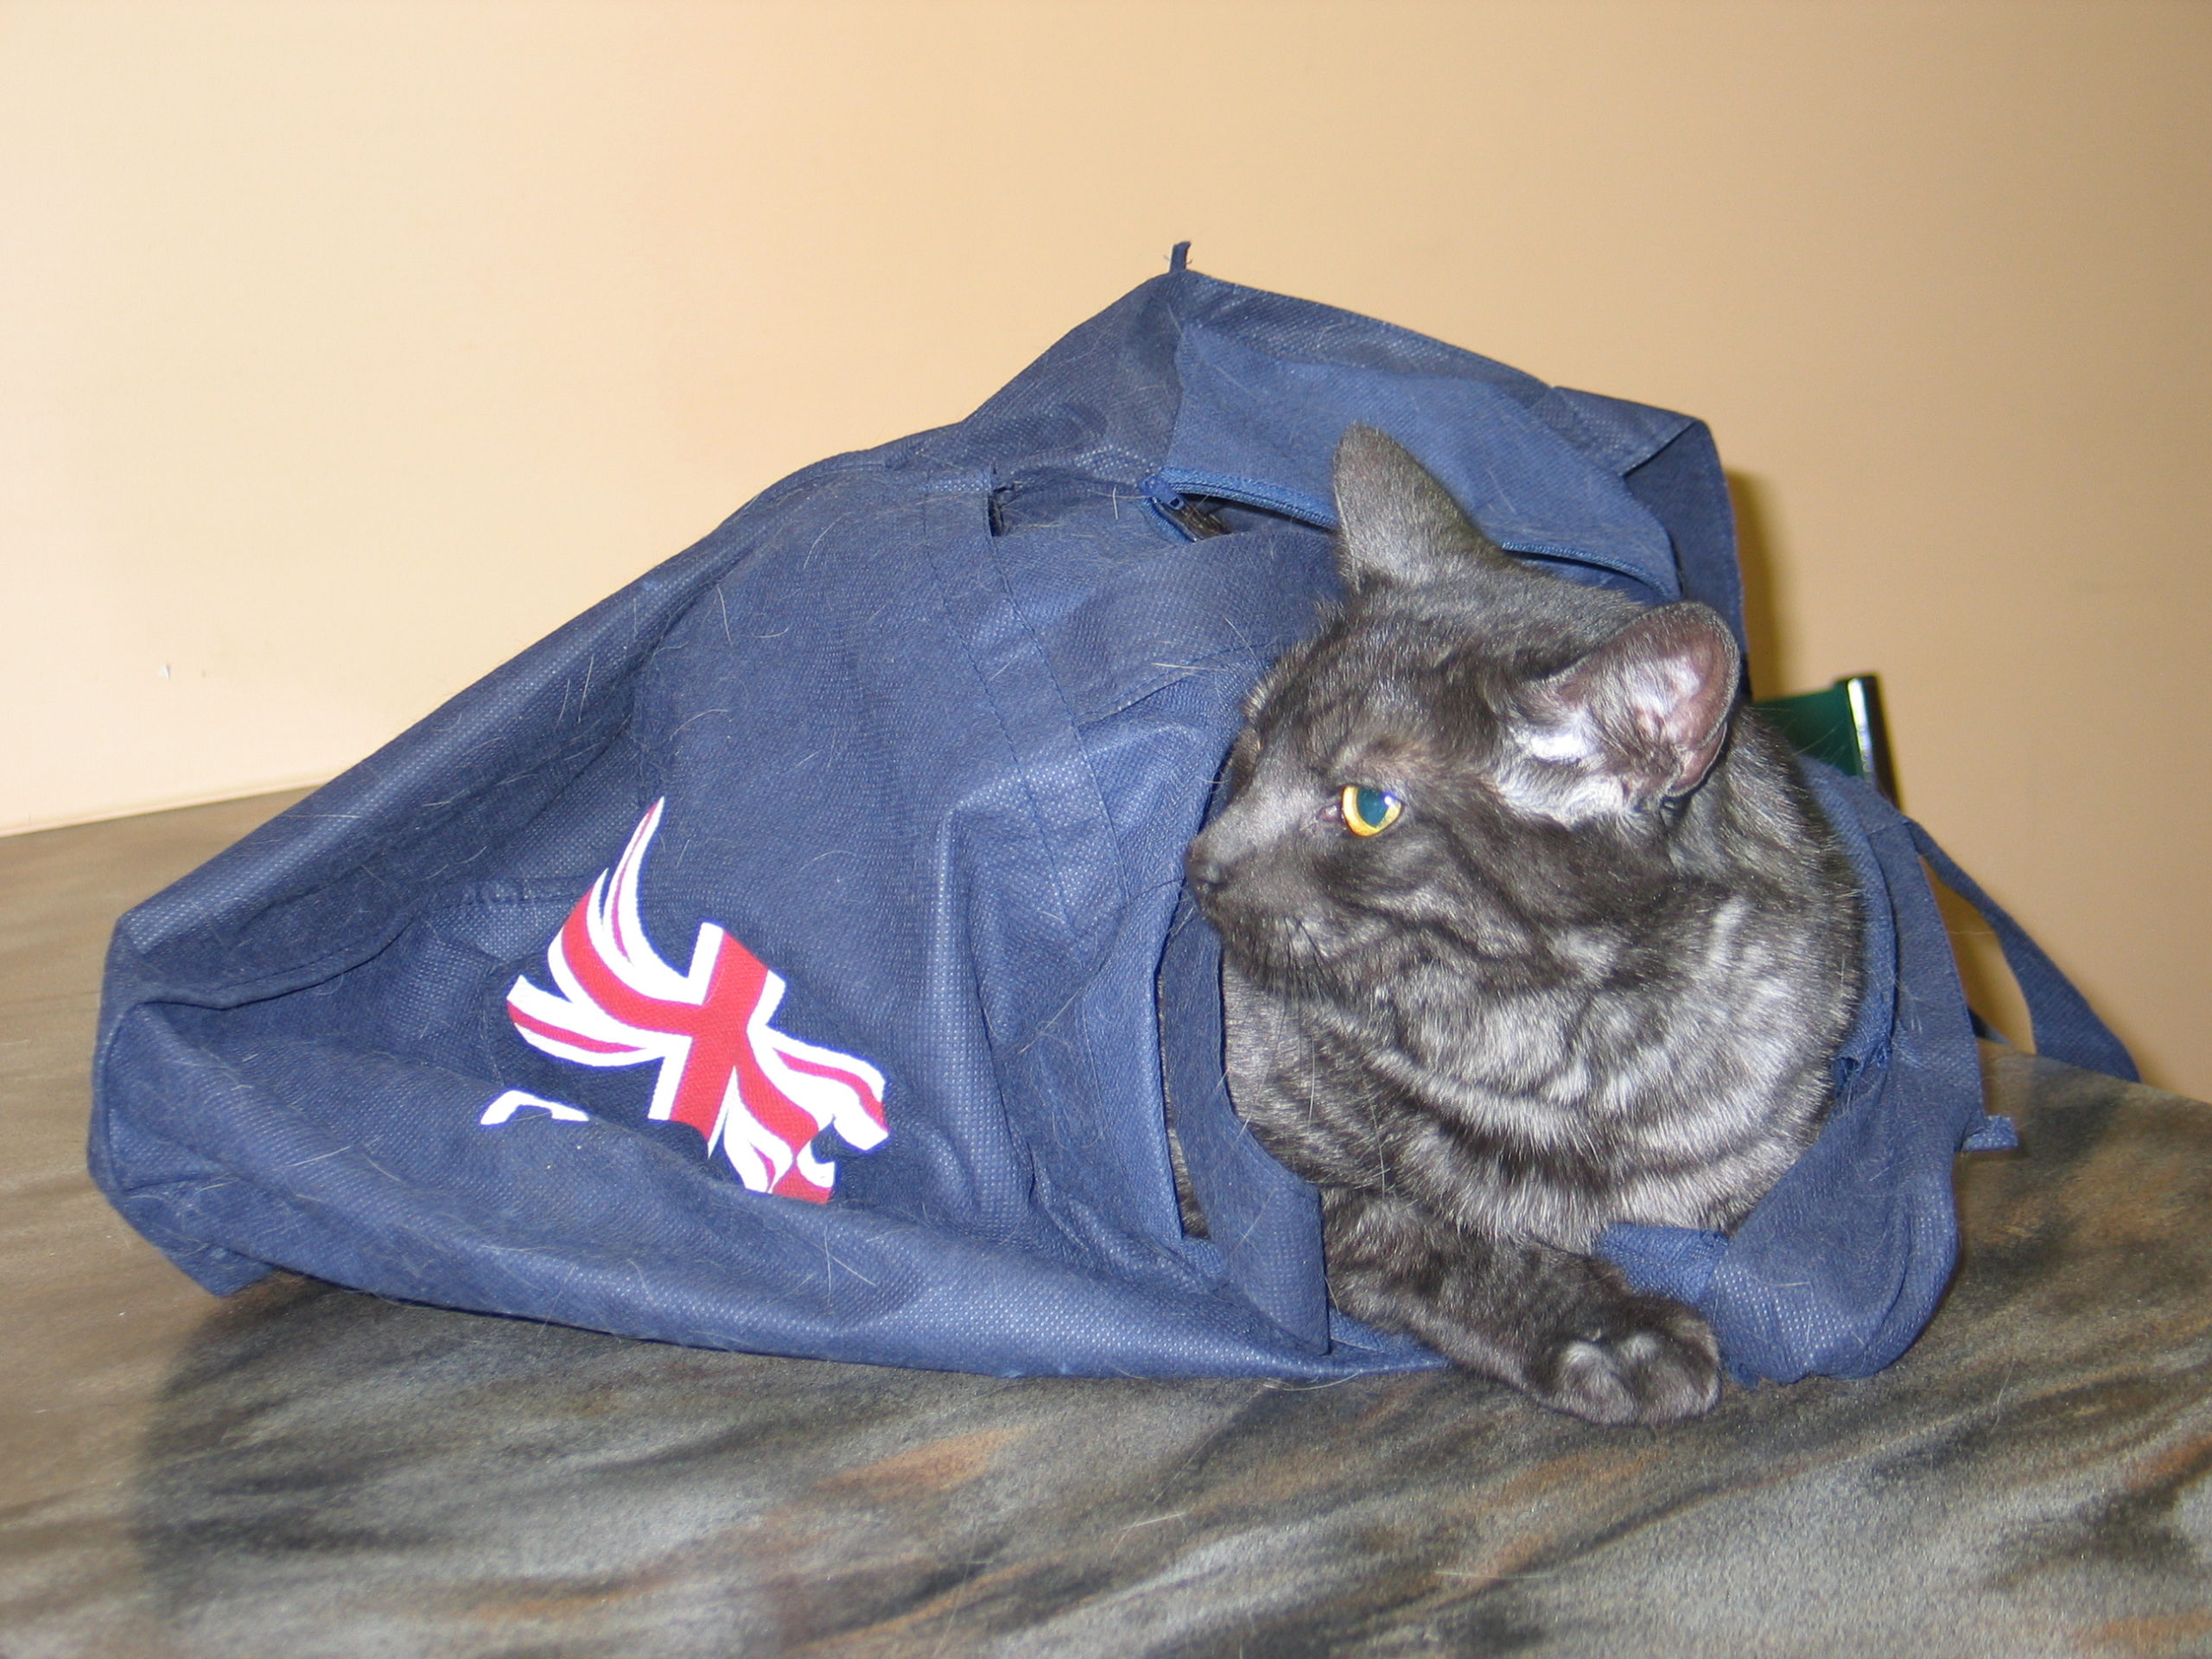 Smokey the cat sitting in a mesh shopping bag